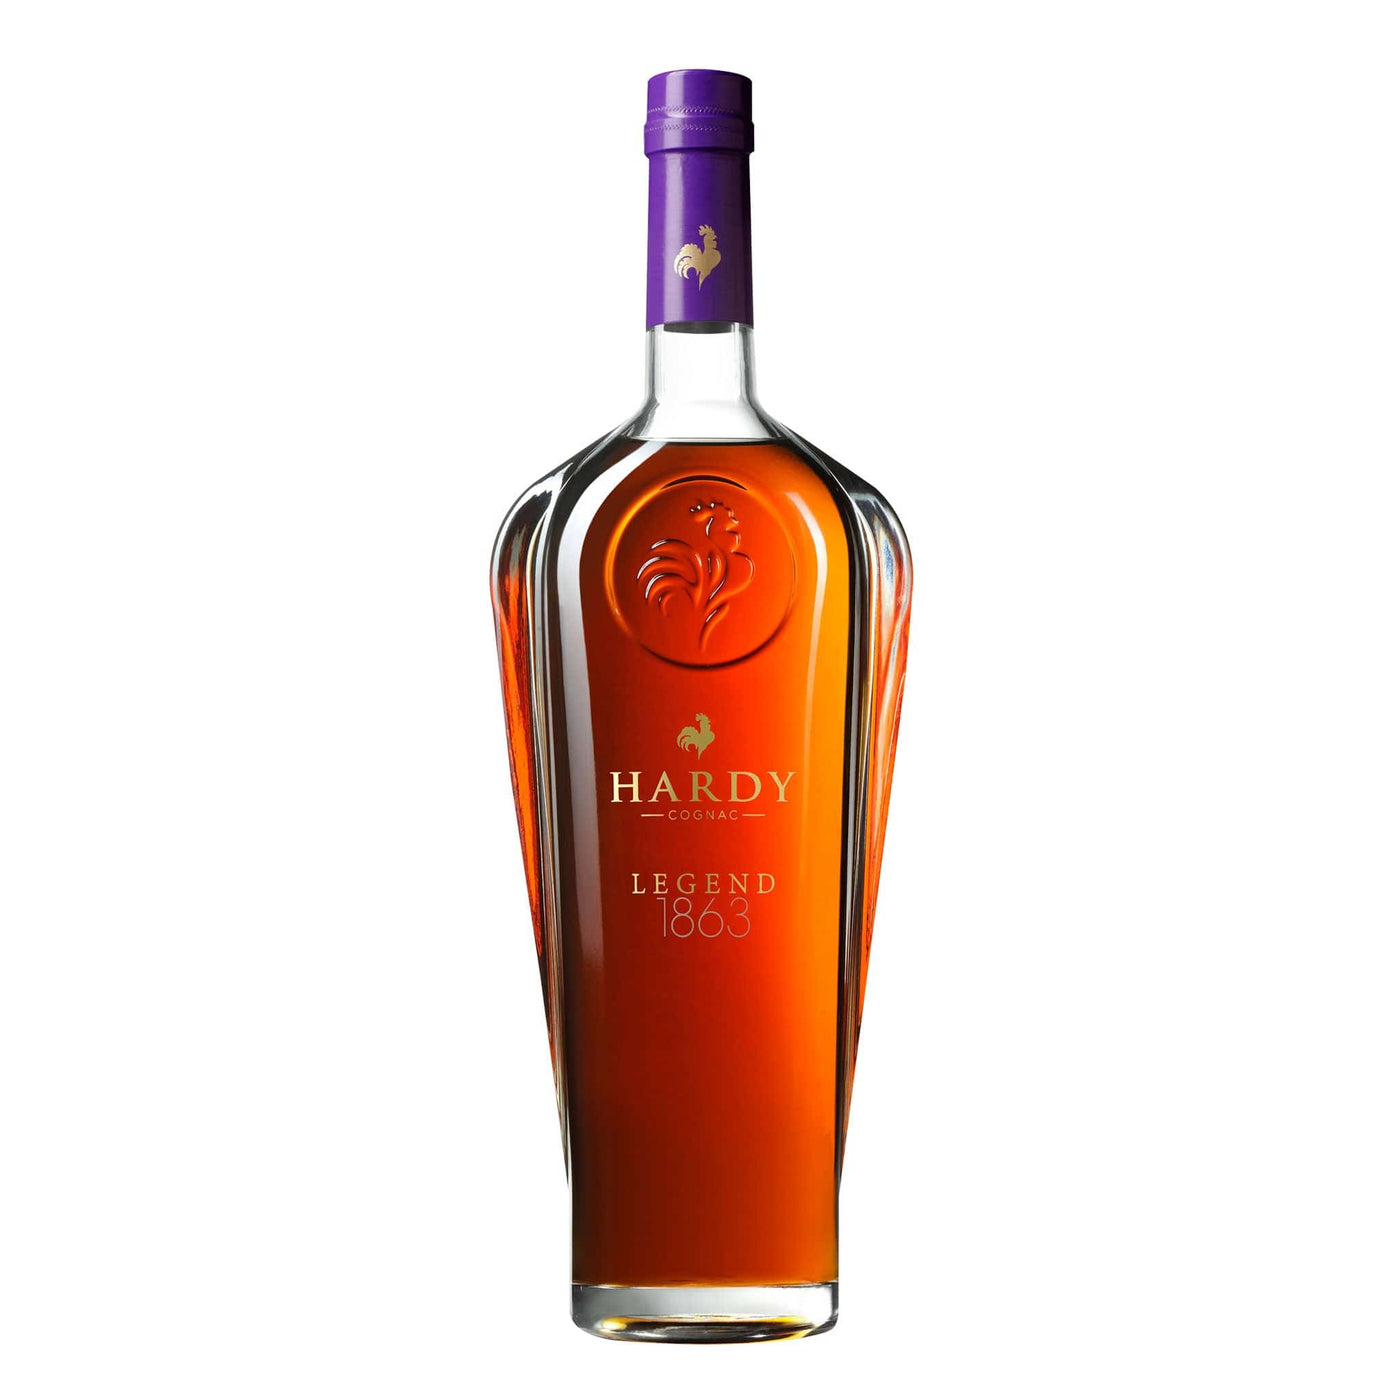 Hardy Legend 1863 Cognac - Spiritly